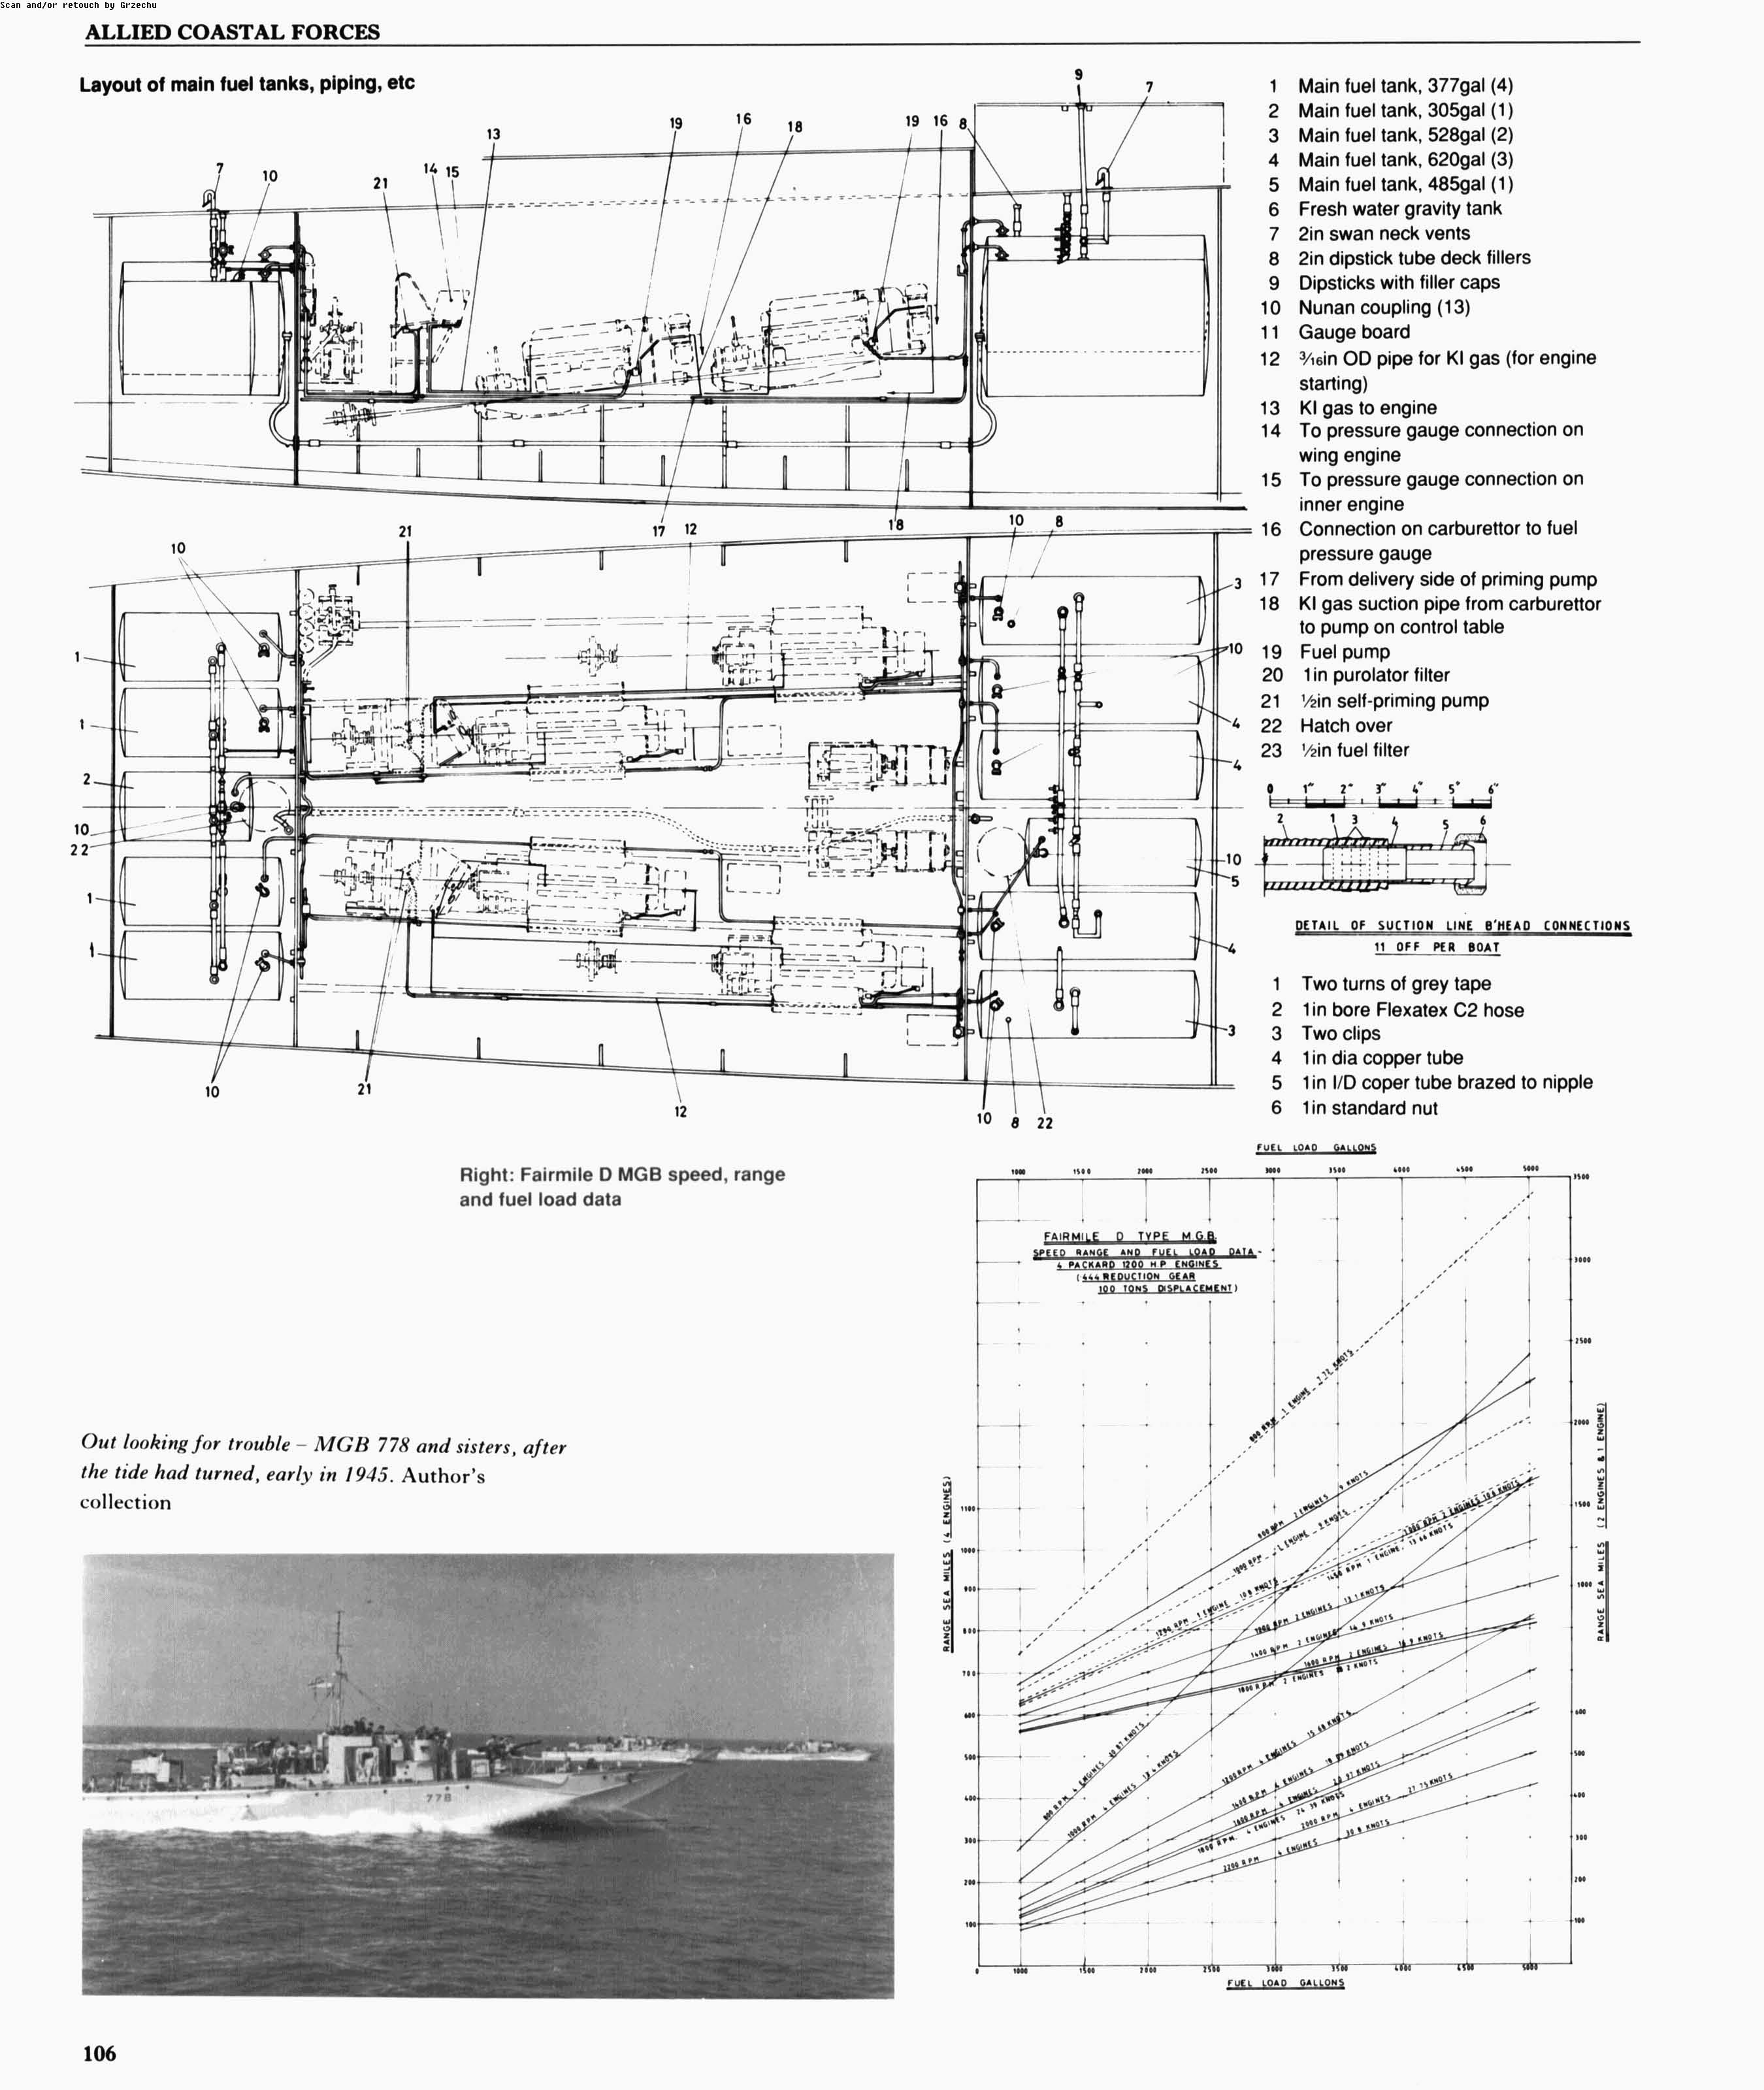 Allied Coastal Forces of World War II (1) Fairmile designs & U.S. submarine chasers_Page_108.jpg